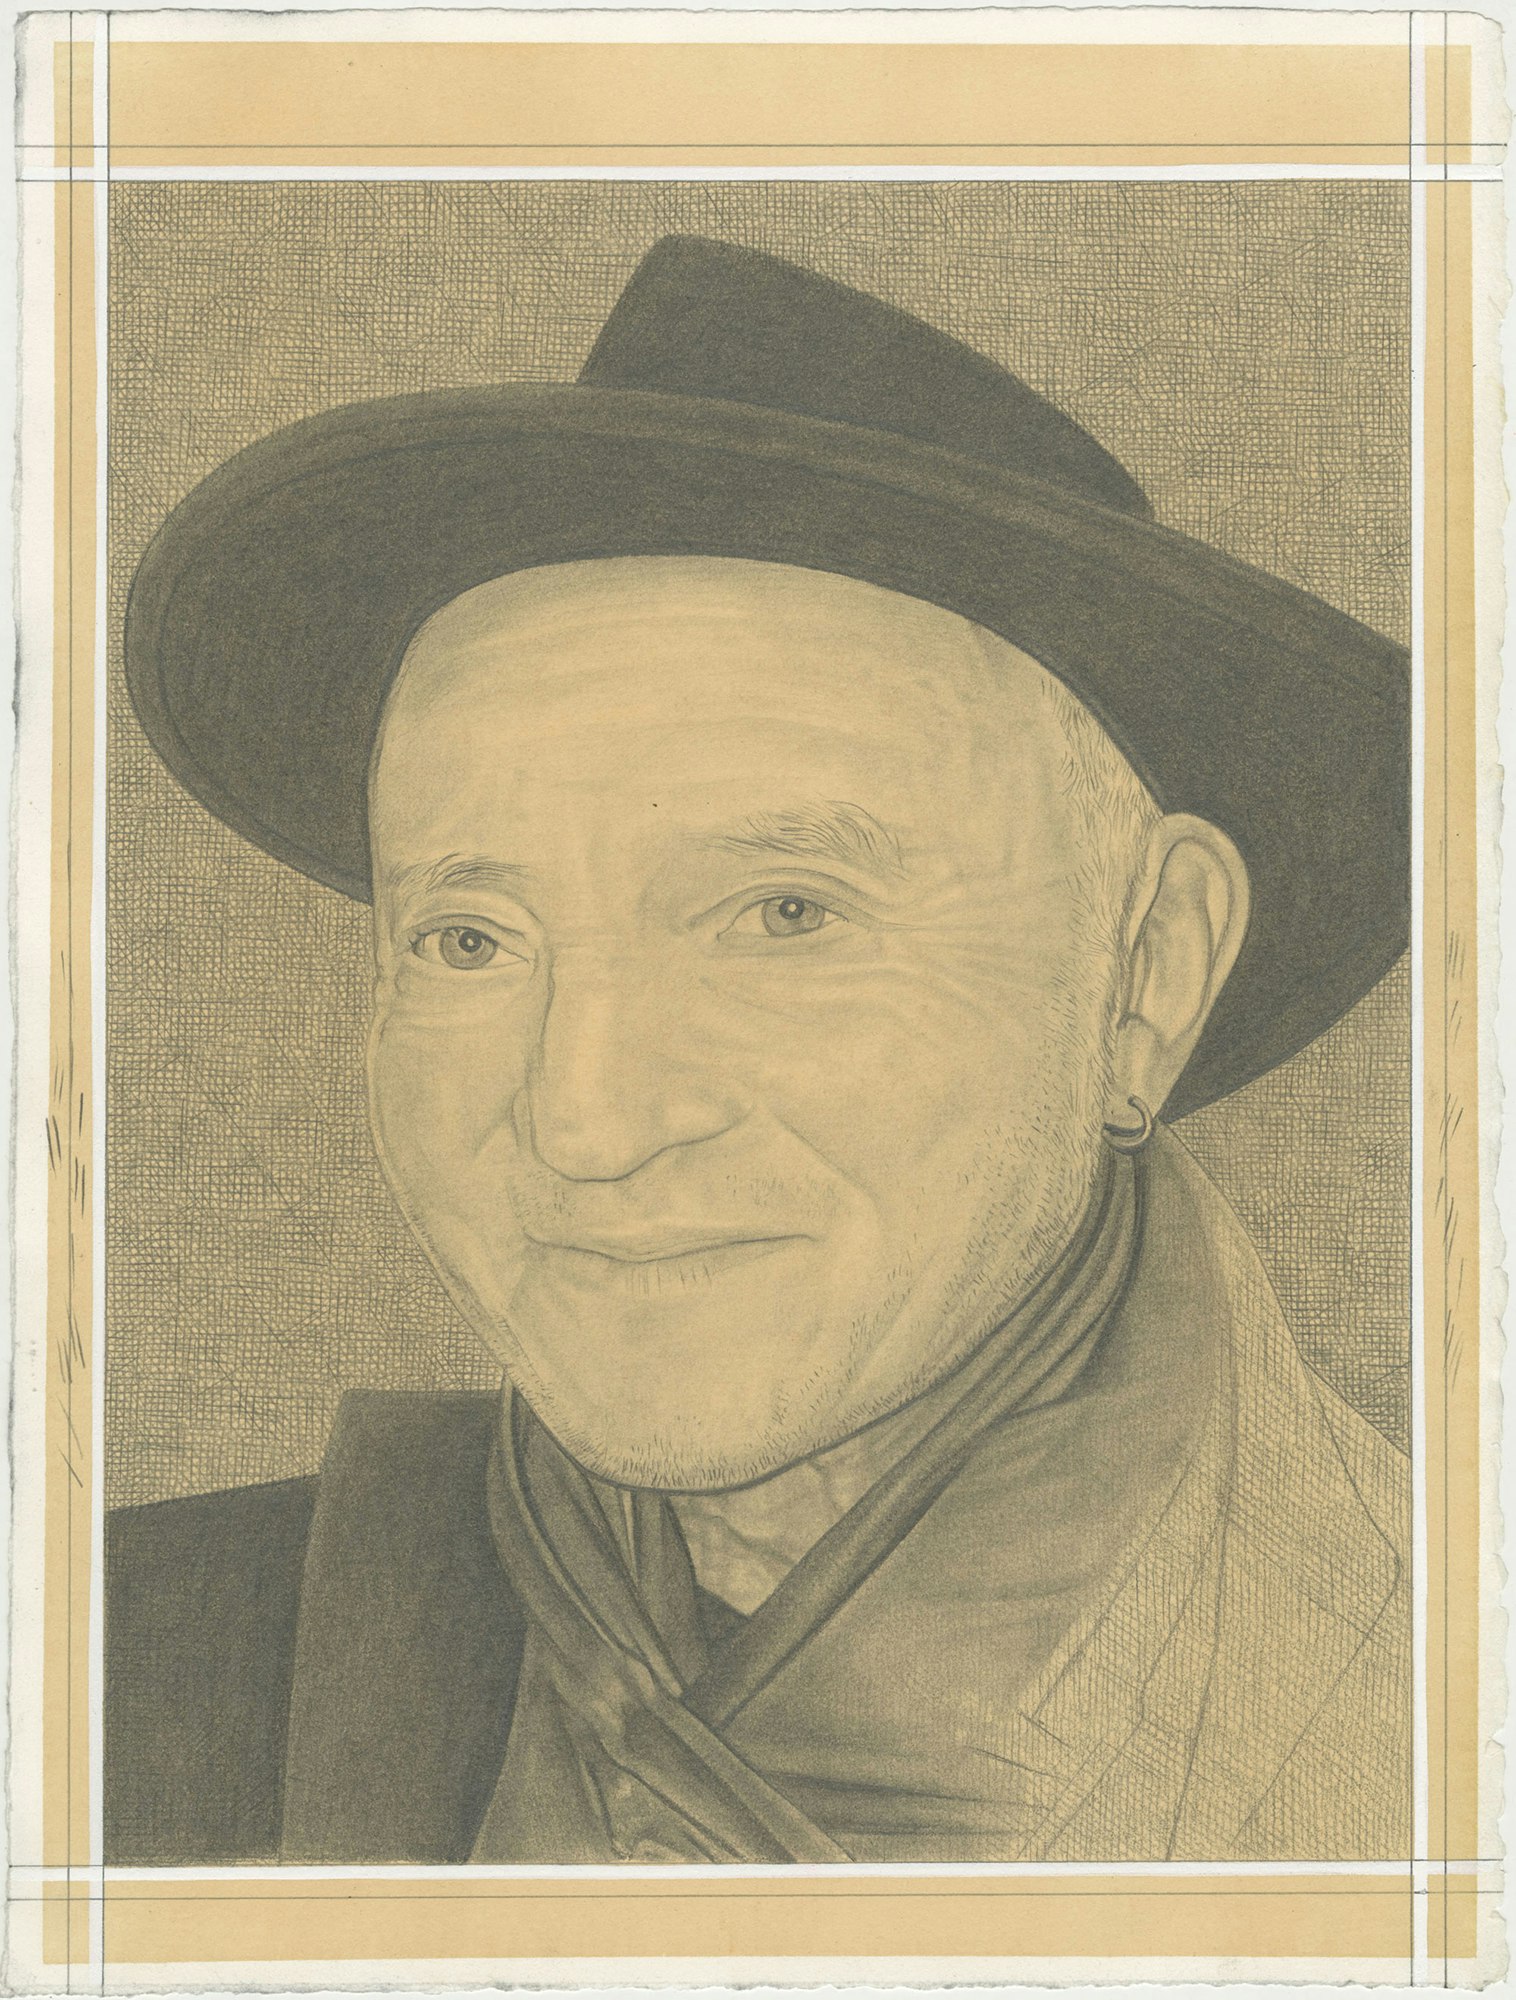 Portrait of Sylvère Lotringer, pencil on paper by Phong H. Bui. 